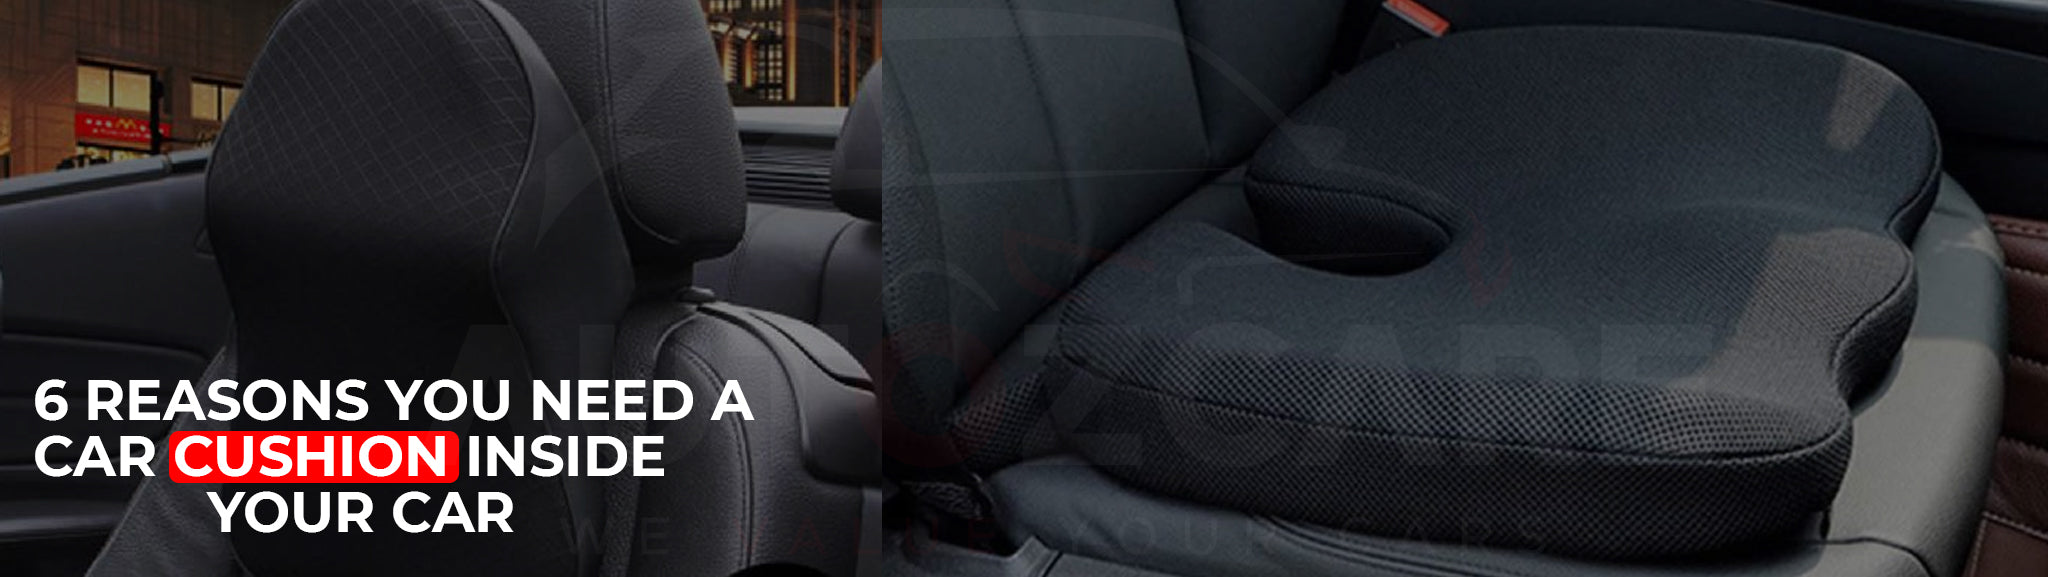 6 reasons you need a car cushion inside your car